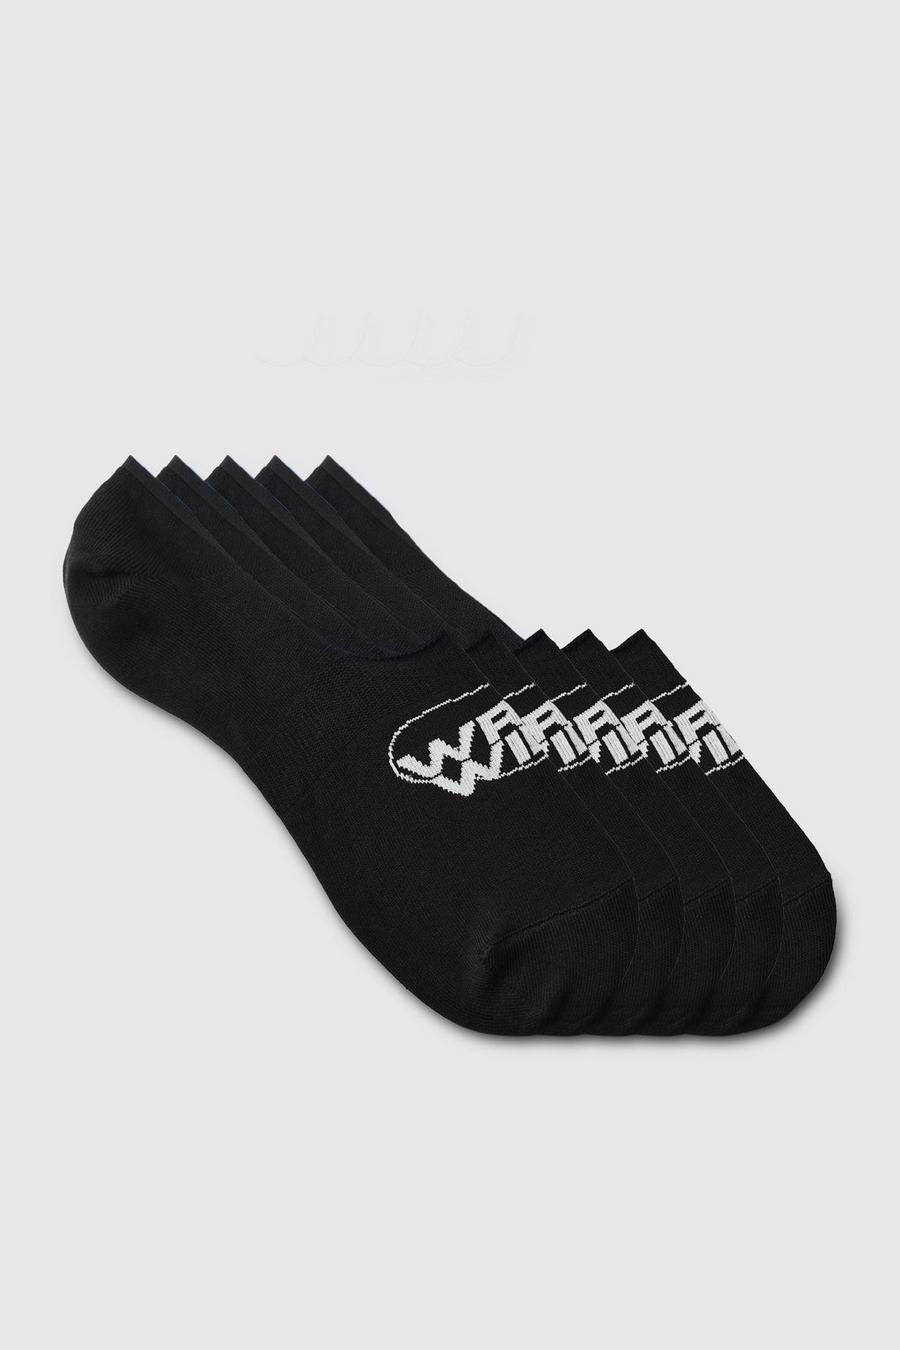 Pack de 5 pares de calcetines invisibles con logo Worldwide, Black